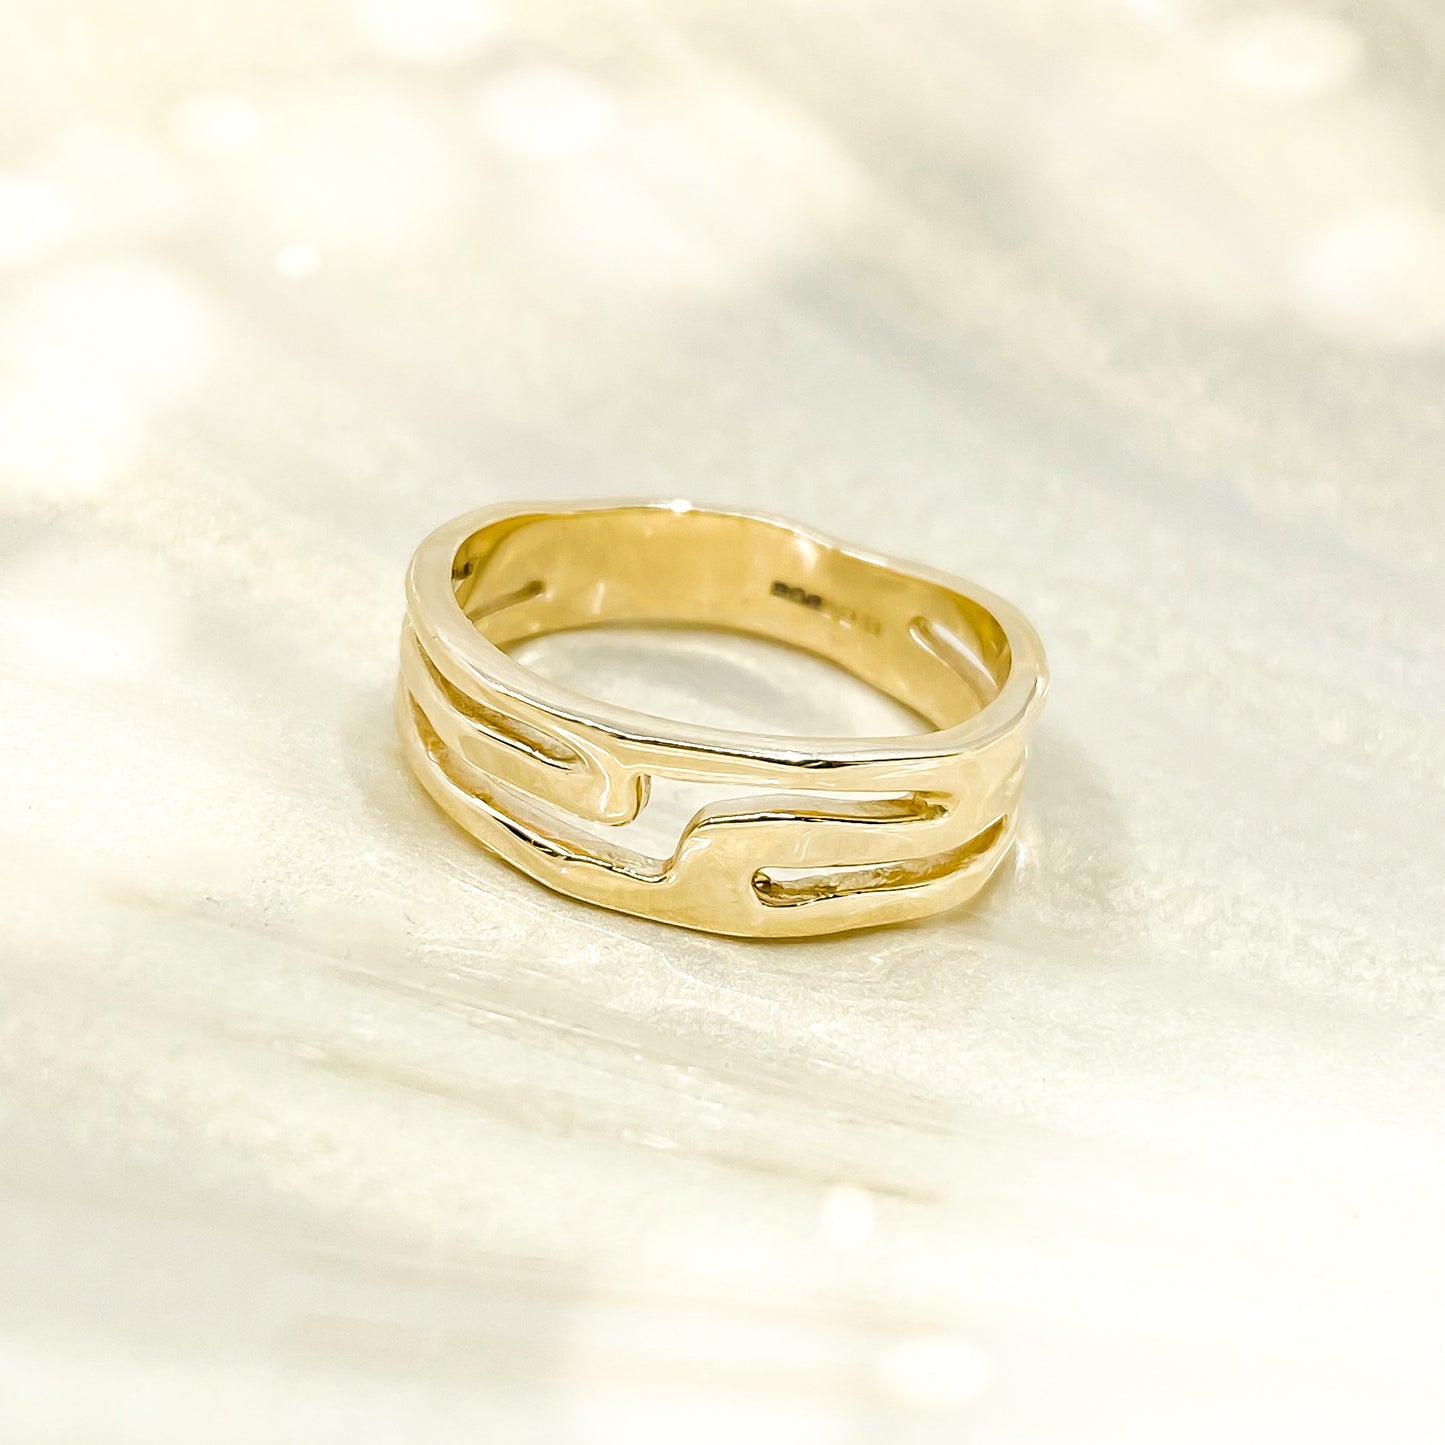 Gold Organic Design Ring